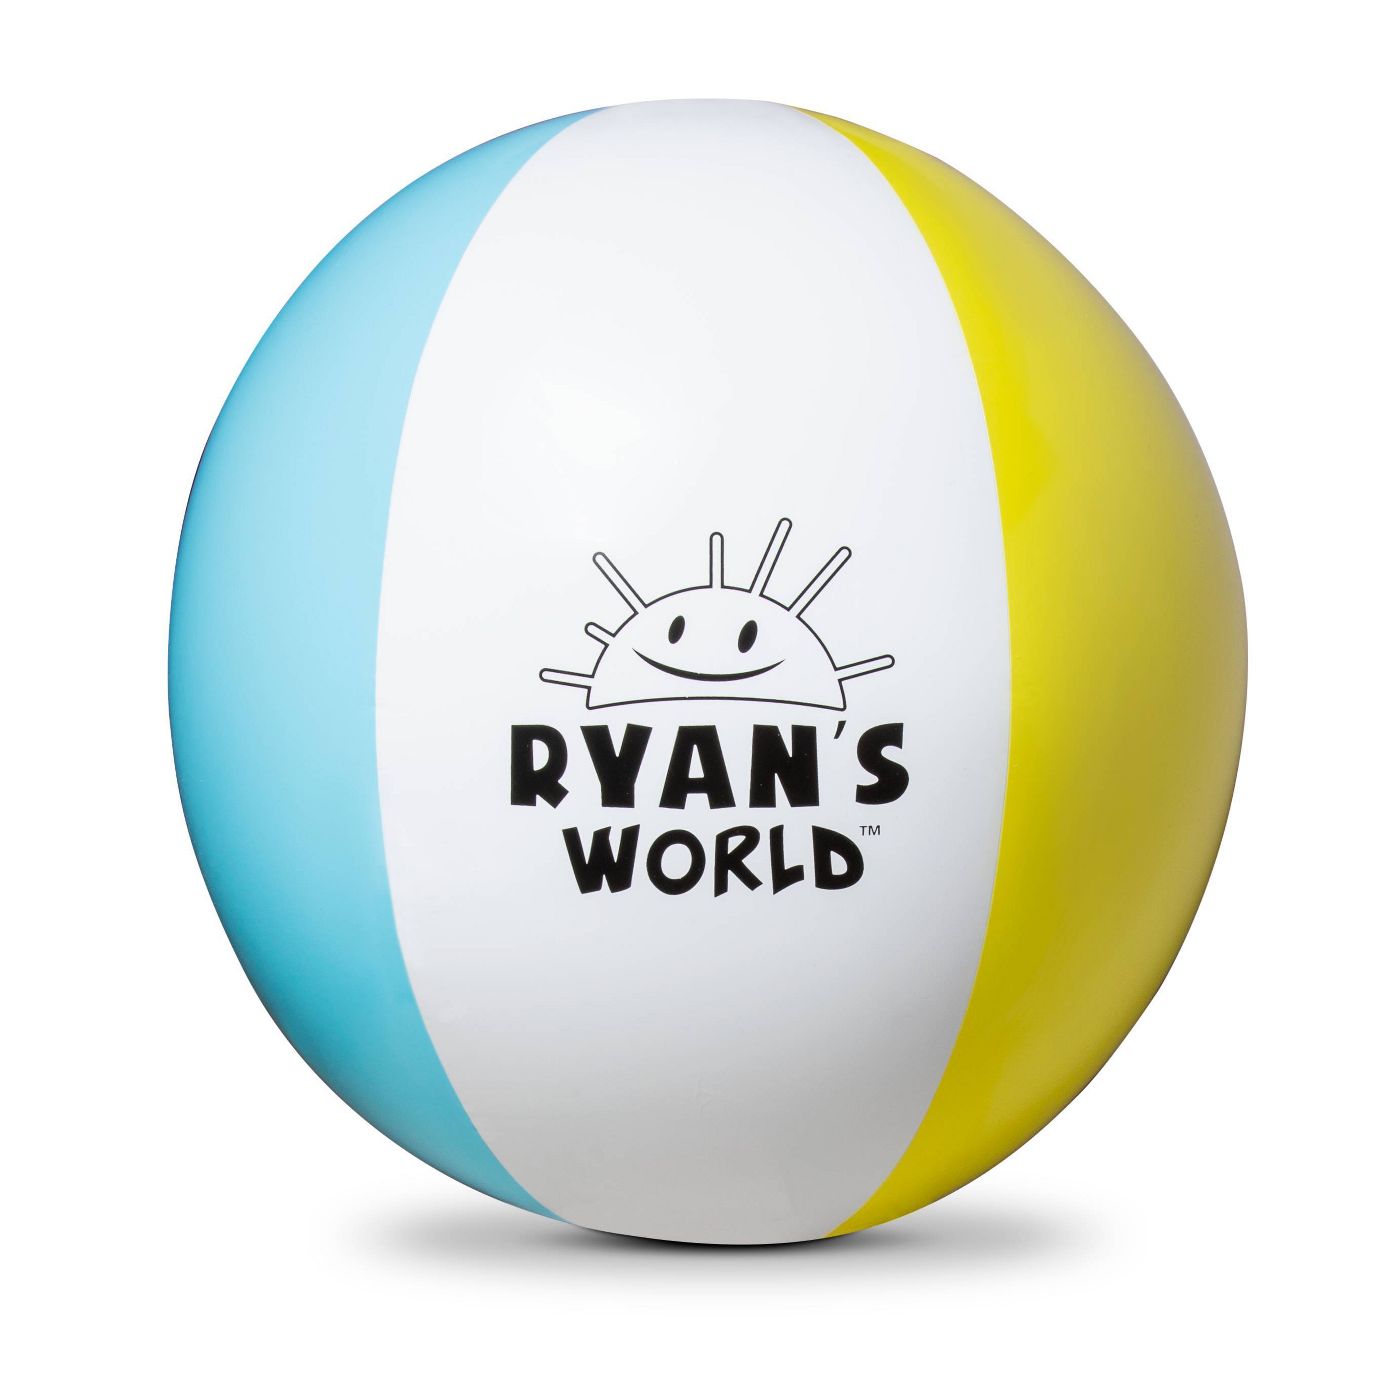 ryan's world sleepover egg target